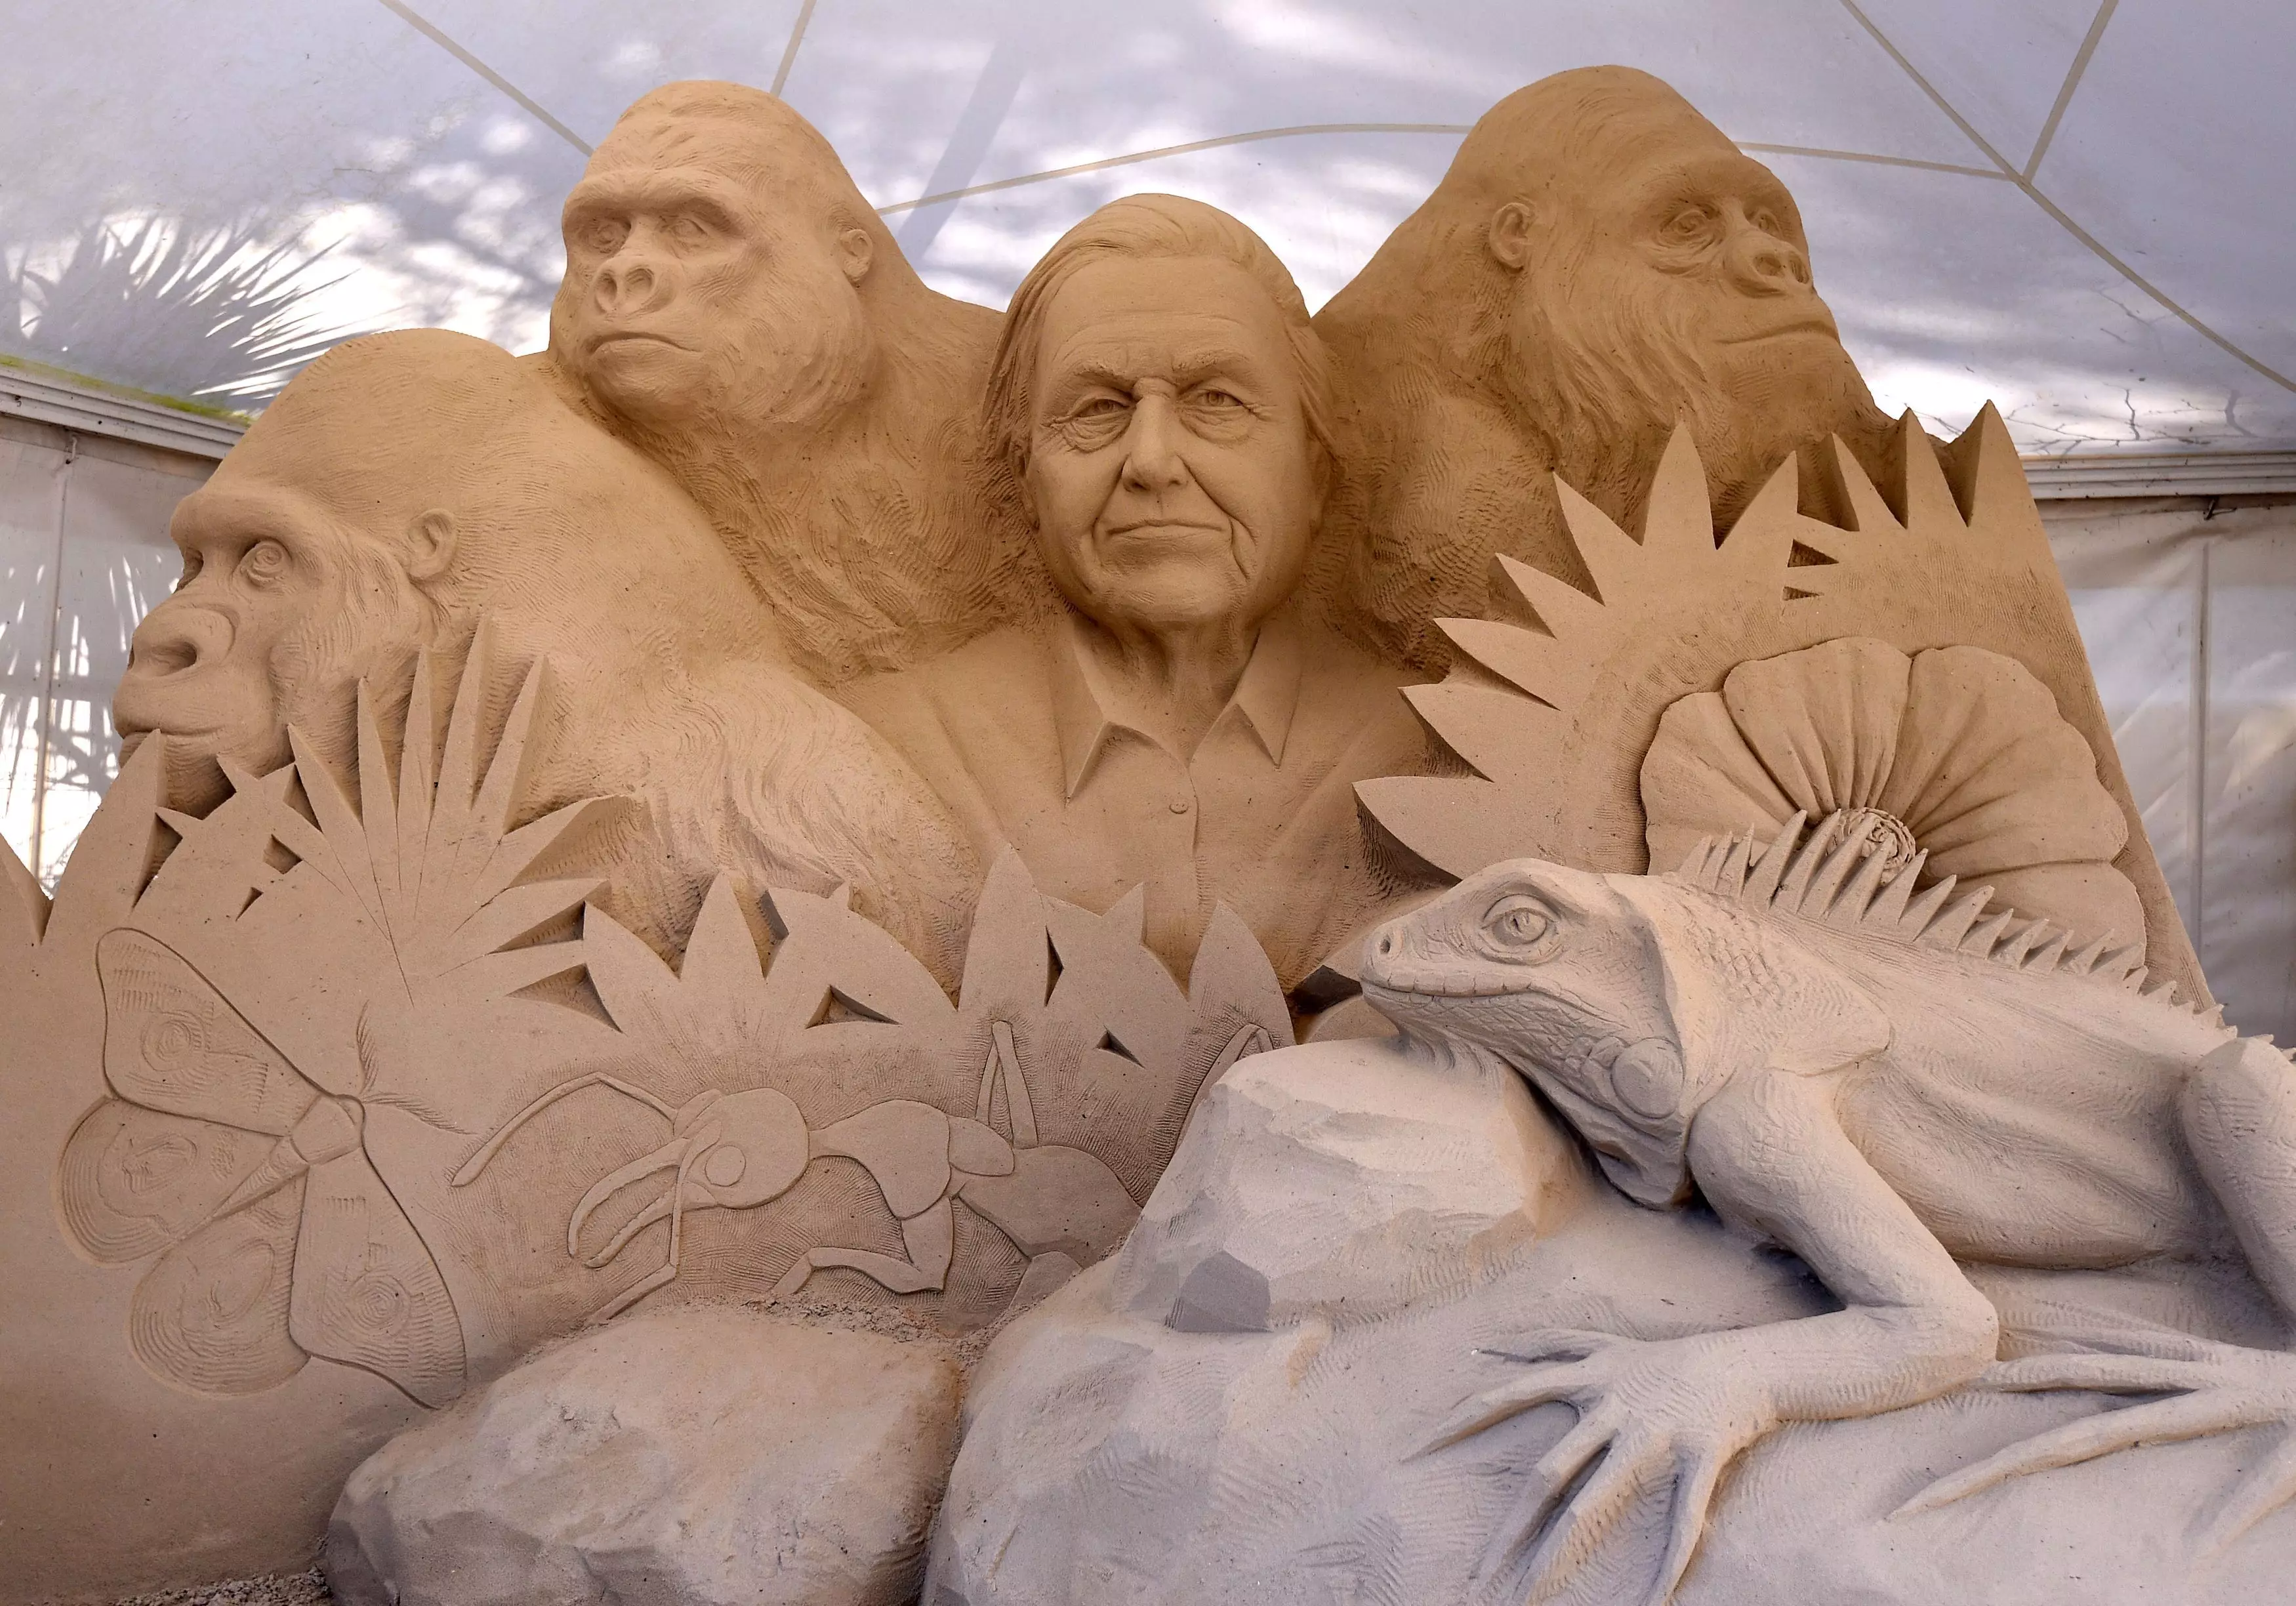 Sand sculpture of David Attenborough